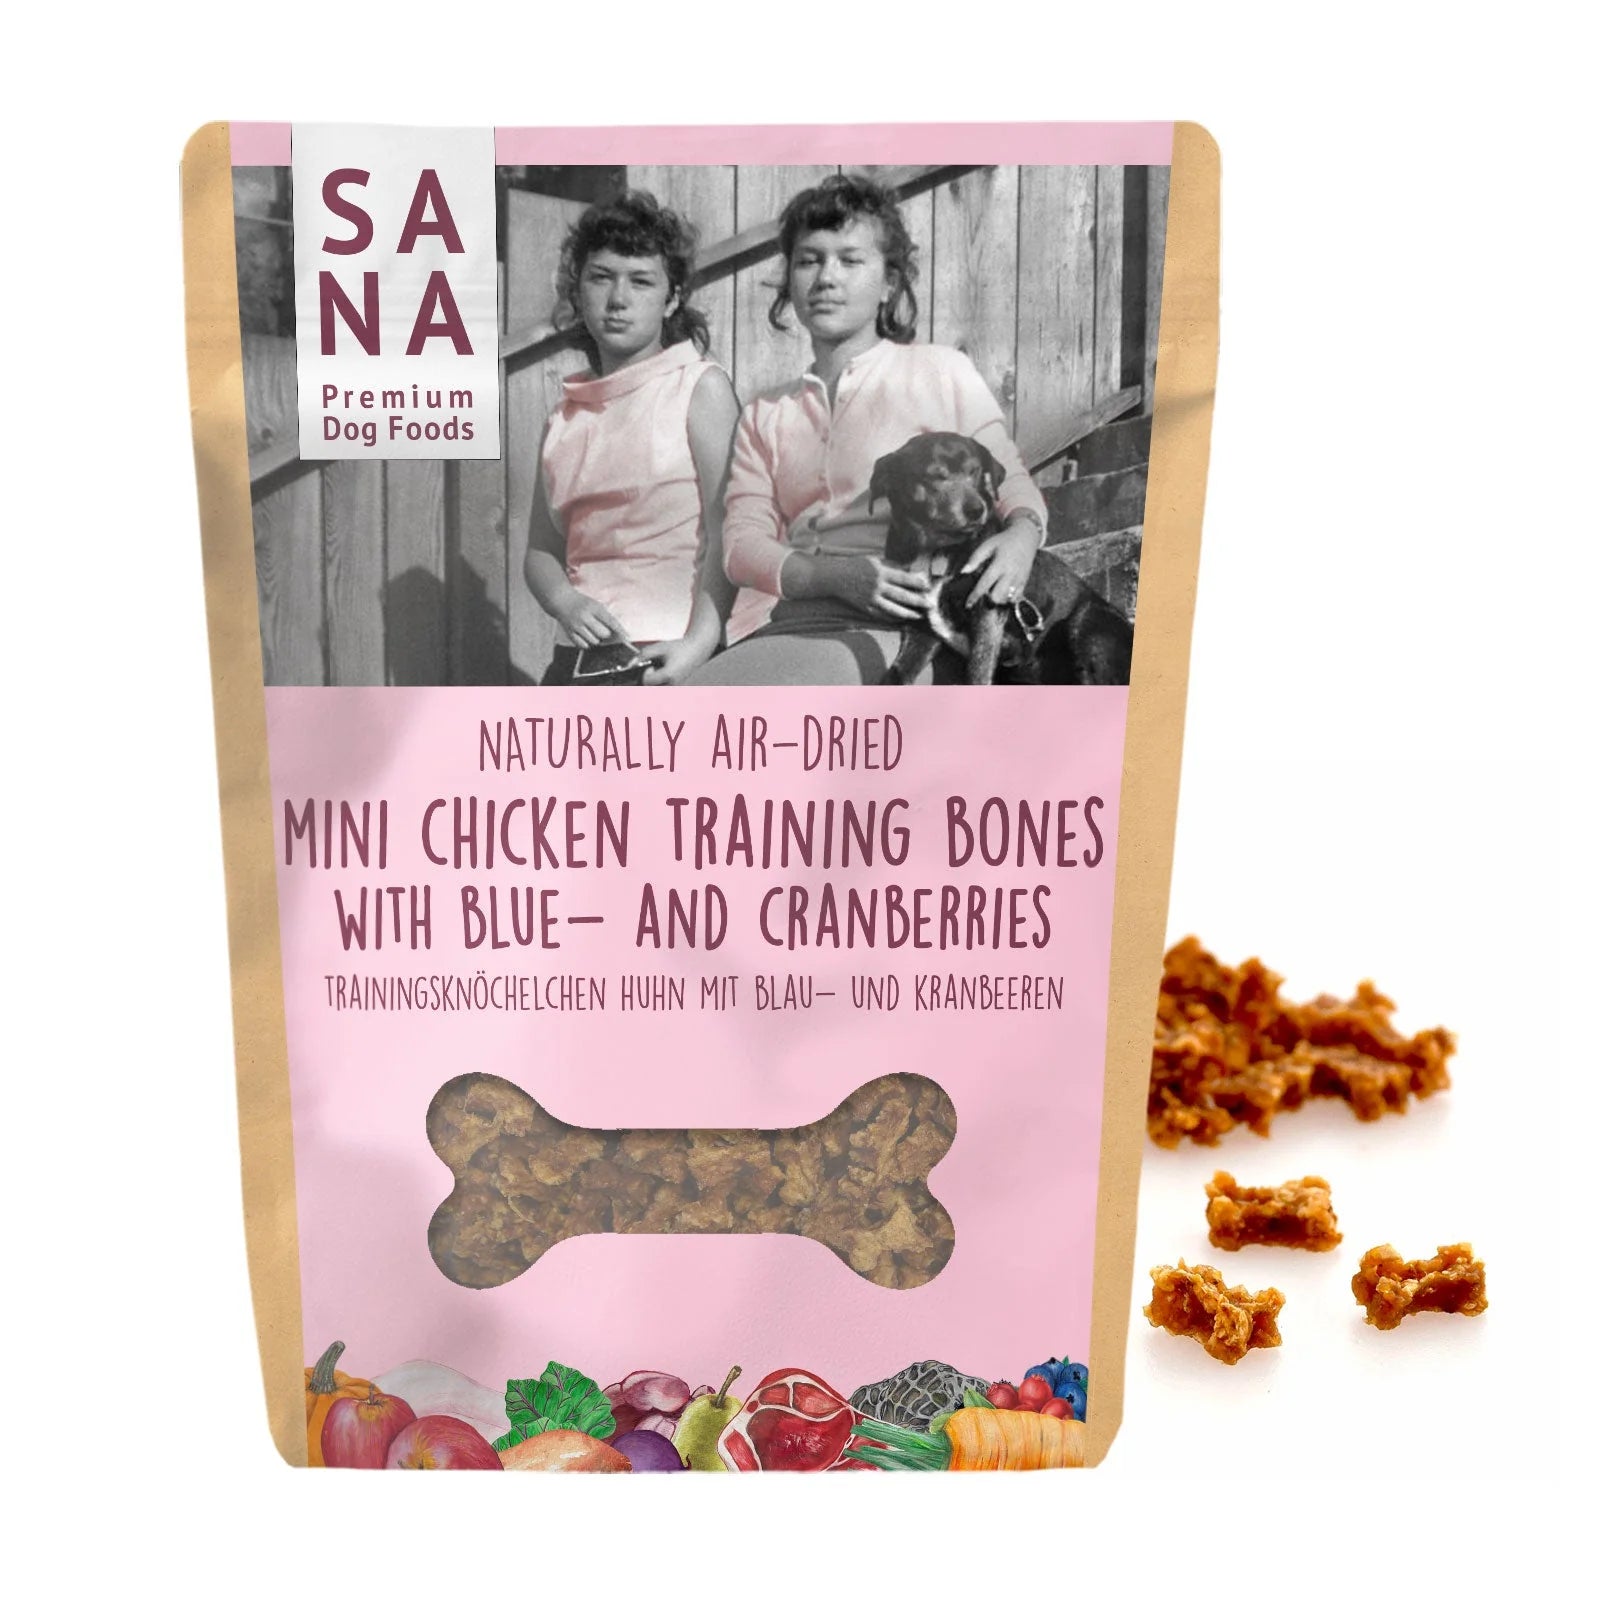 Sana Mini Chicken Training Bones With Blueberries and Cranberries